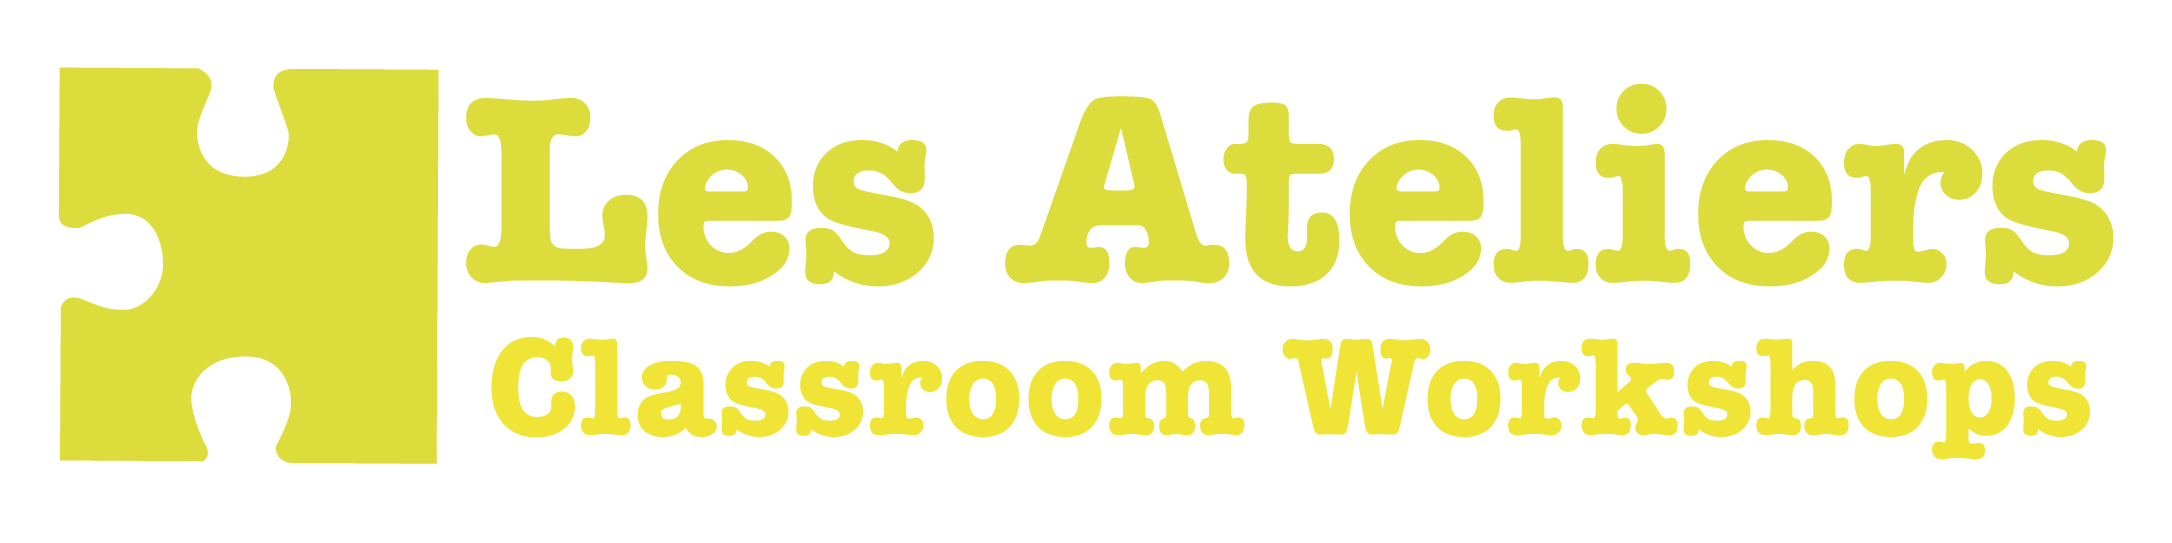 Classroom workshops